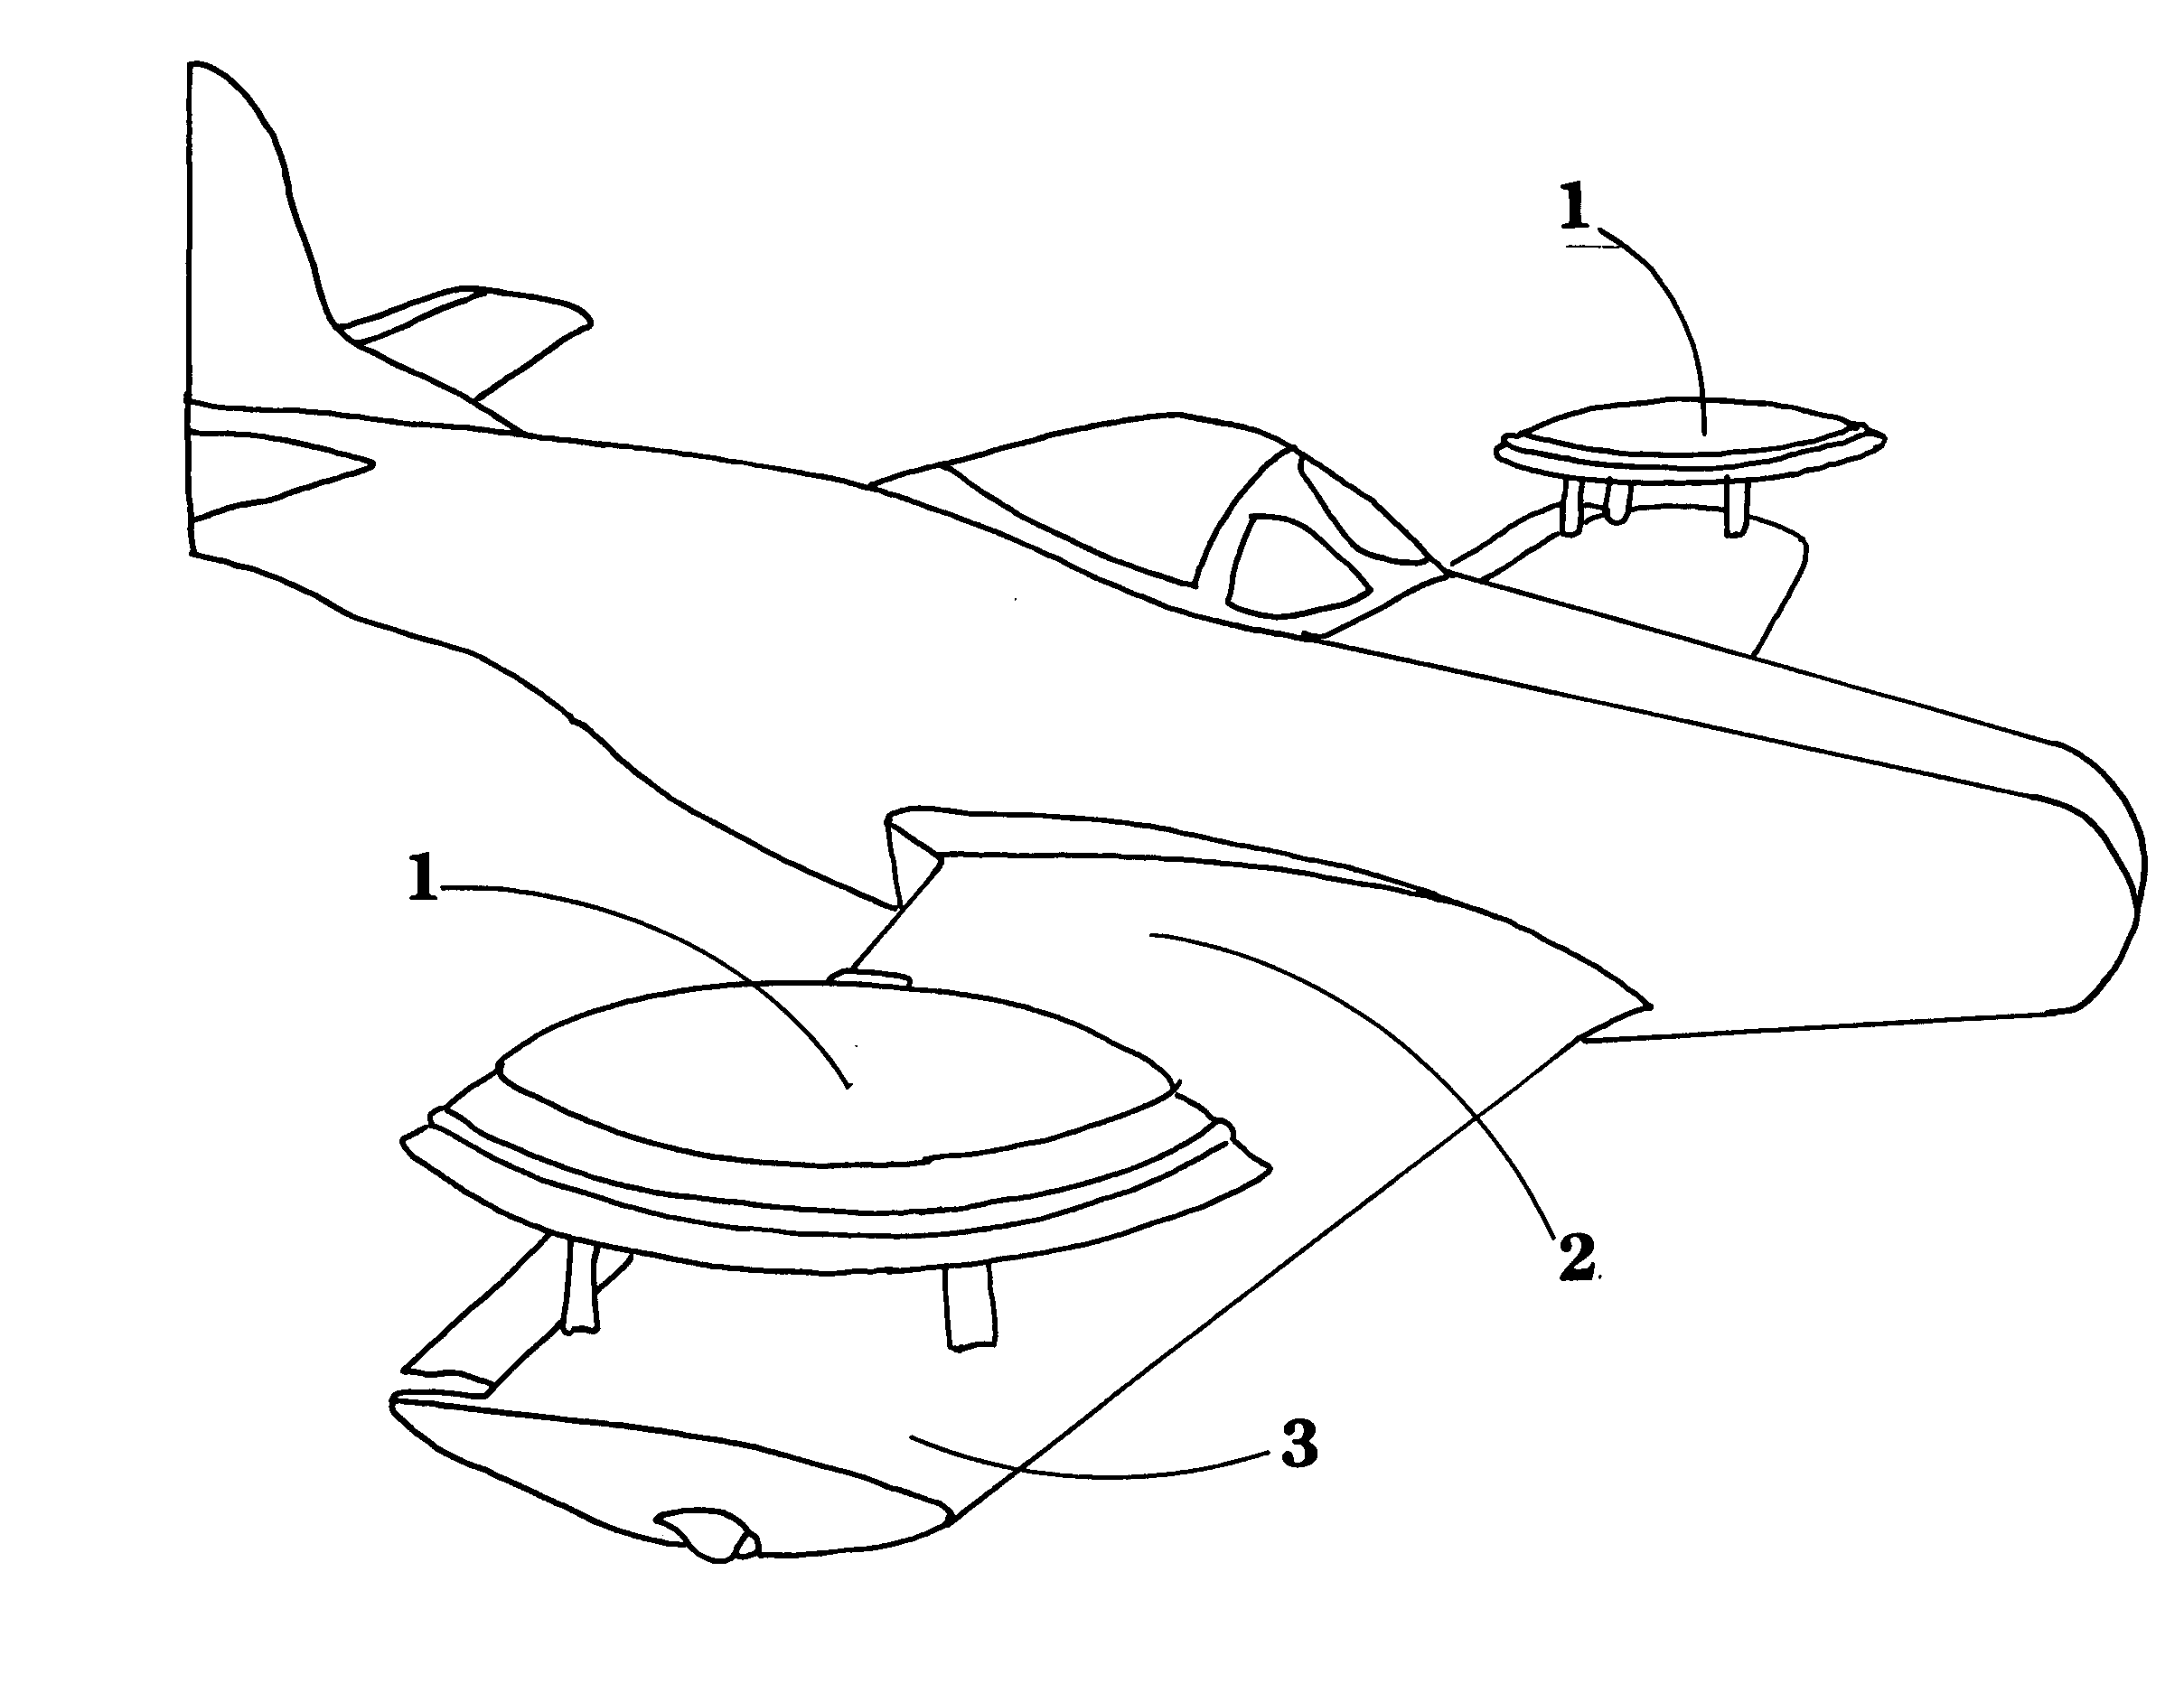 Hamilton H.N2 laminar flow diskette wing